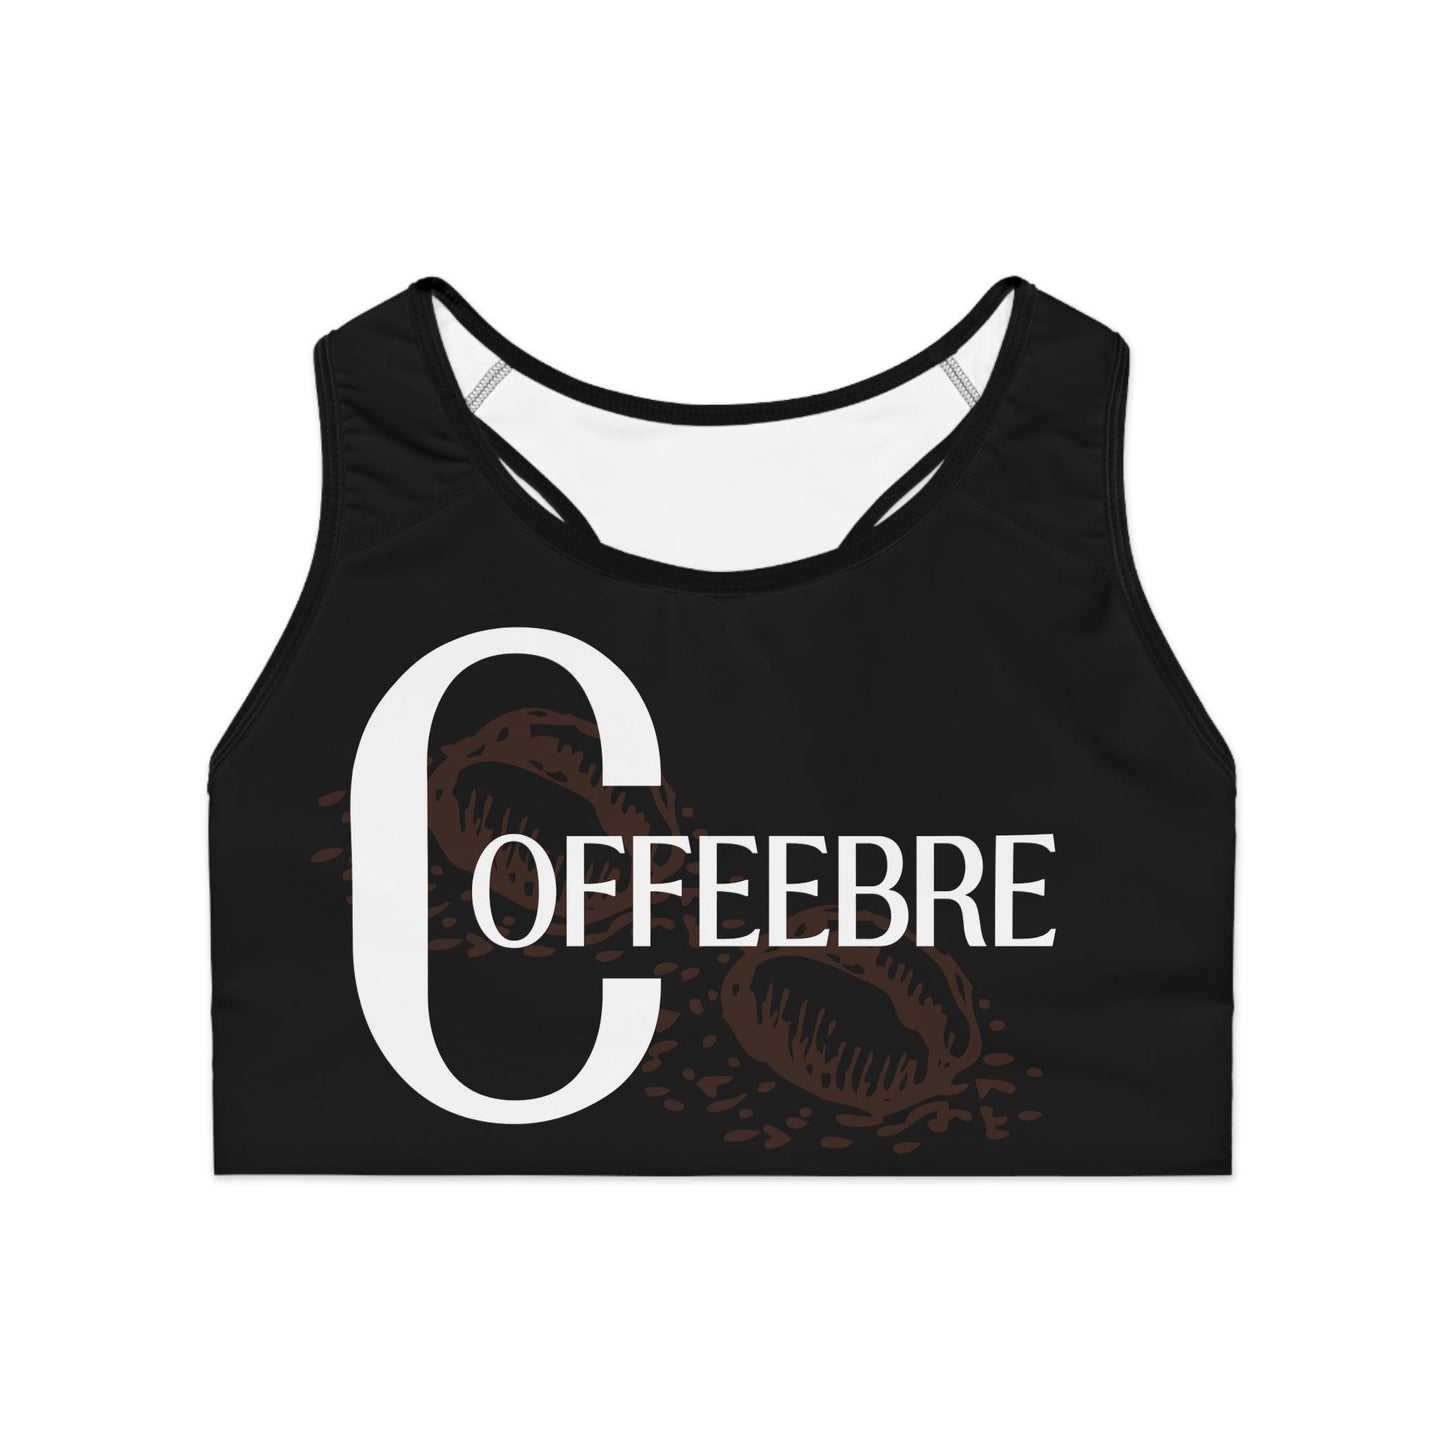 Black Sports Bra - COFFEEBRE